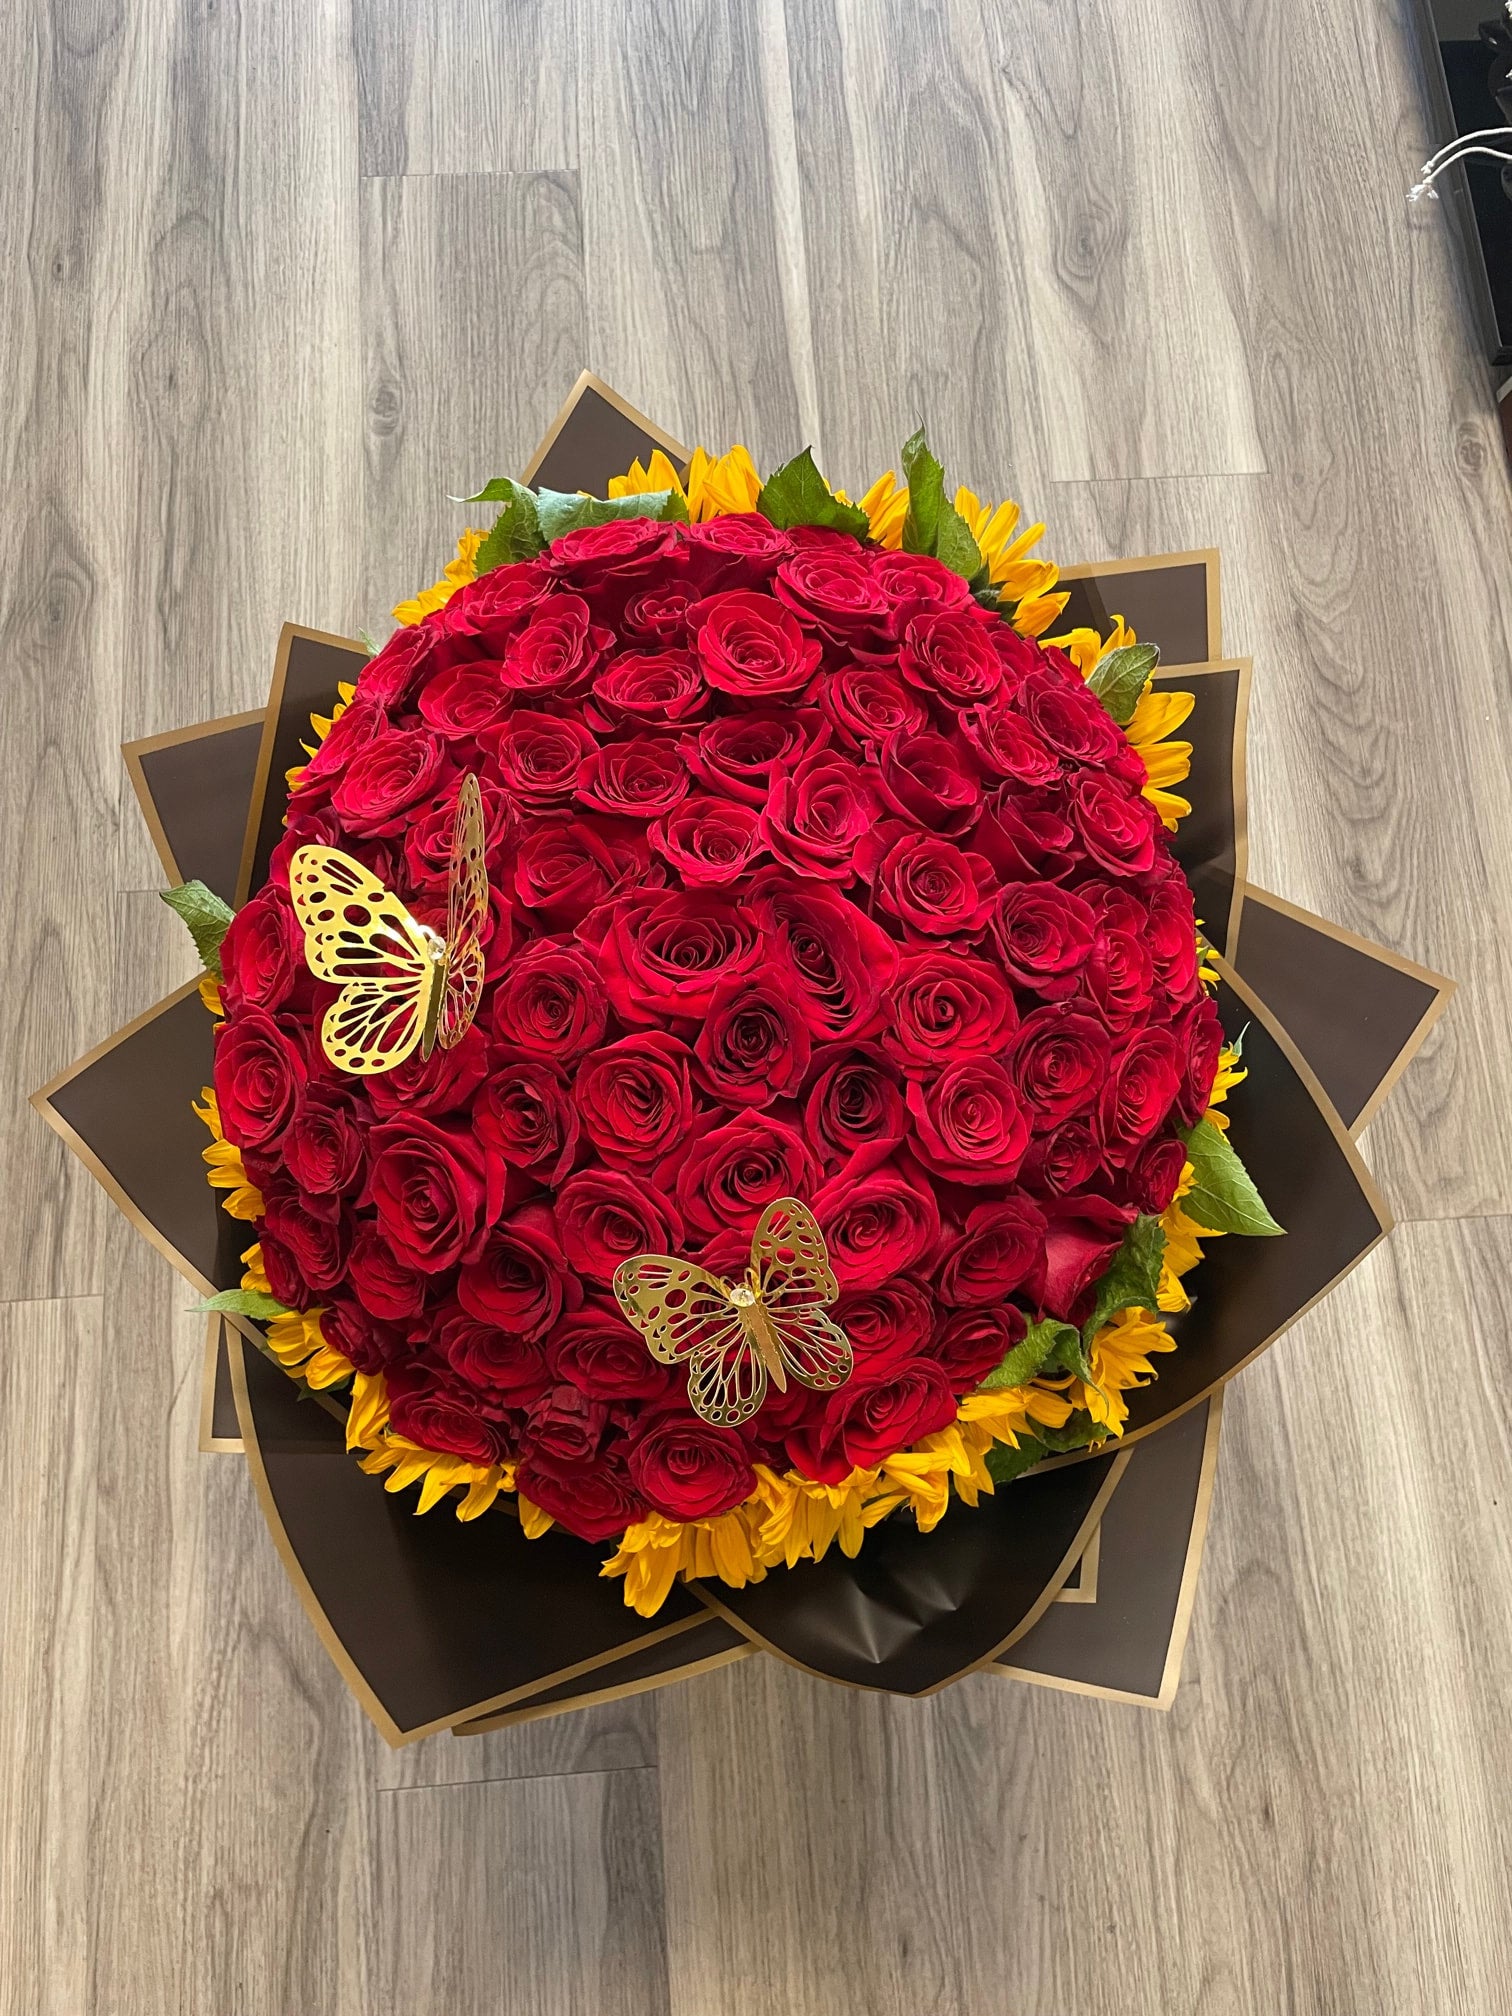 That sparkle ✨✨✨😍 #50redroses #ramobuchon #crown #rosasrojas